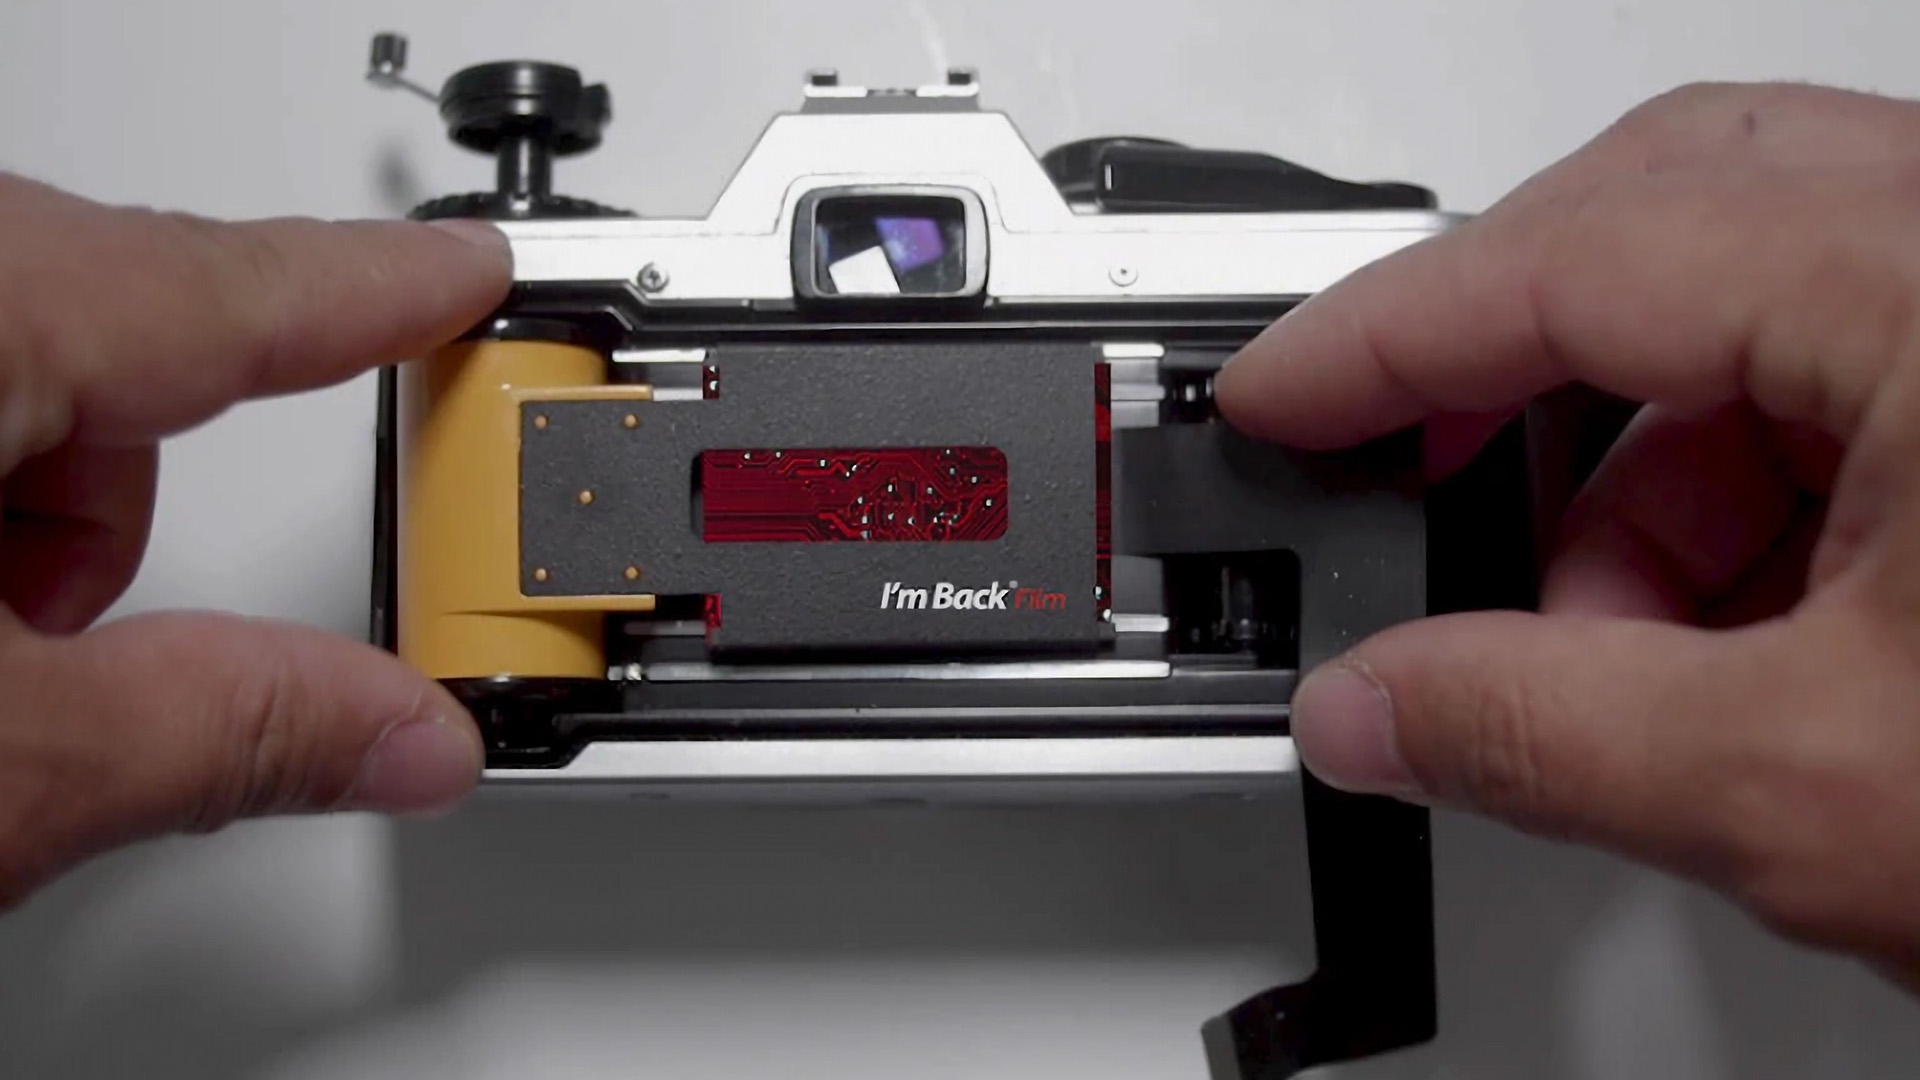 Digital Film Cartridge for Analog Cameras – I'm Back Film Introduced